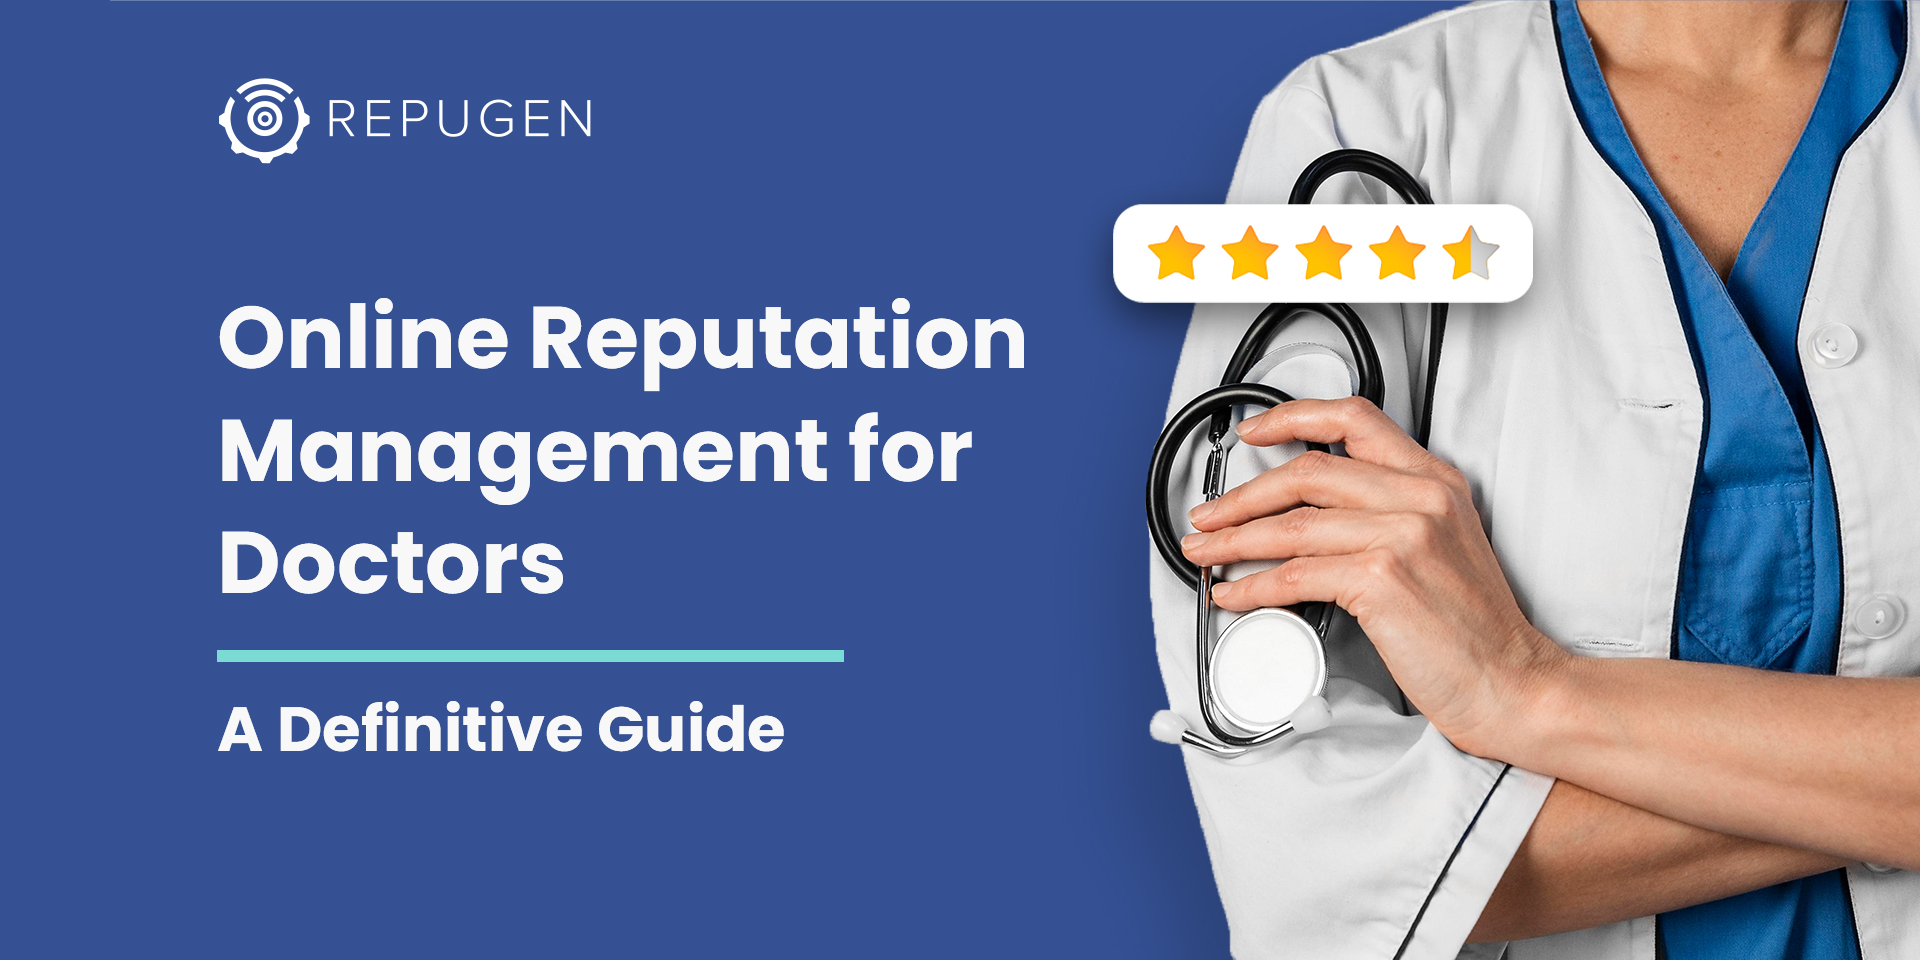 Online Reputation Management for Doctors: A Definitive Guide